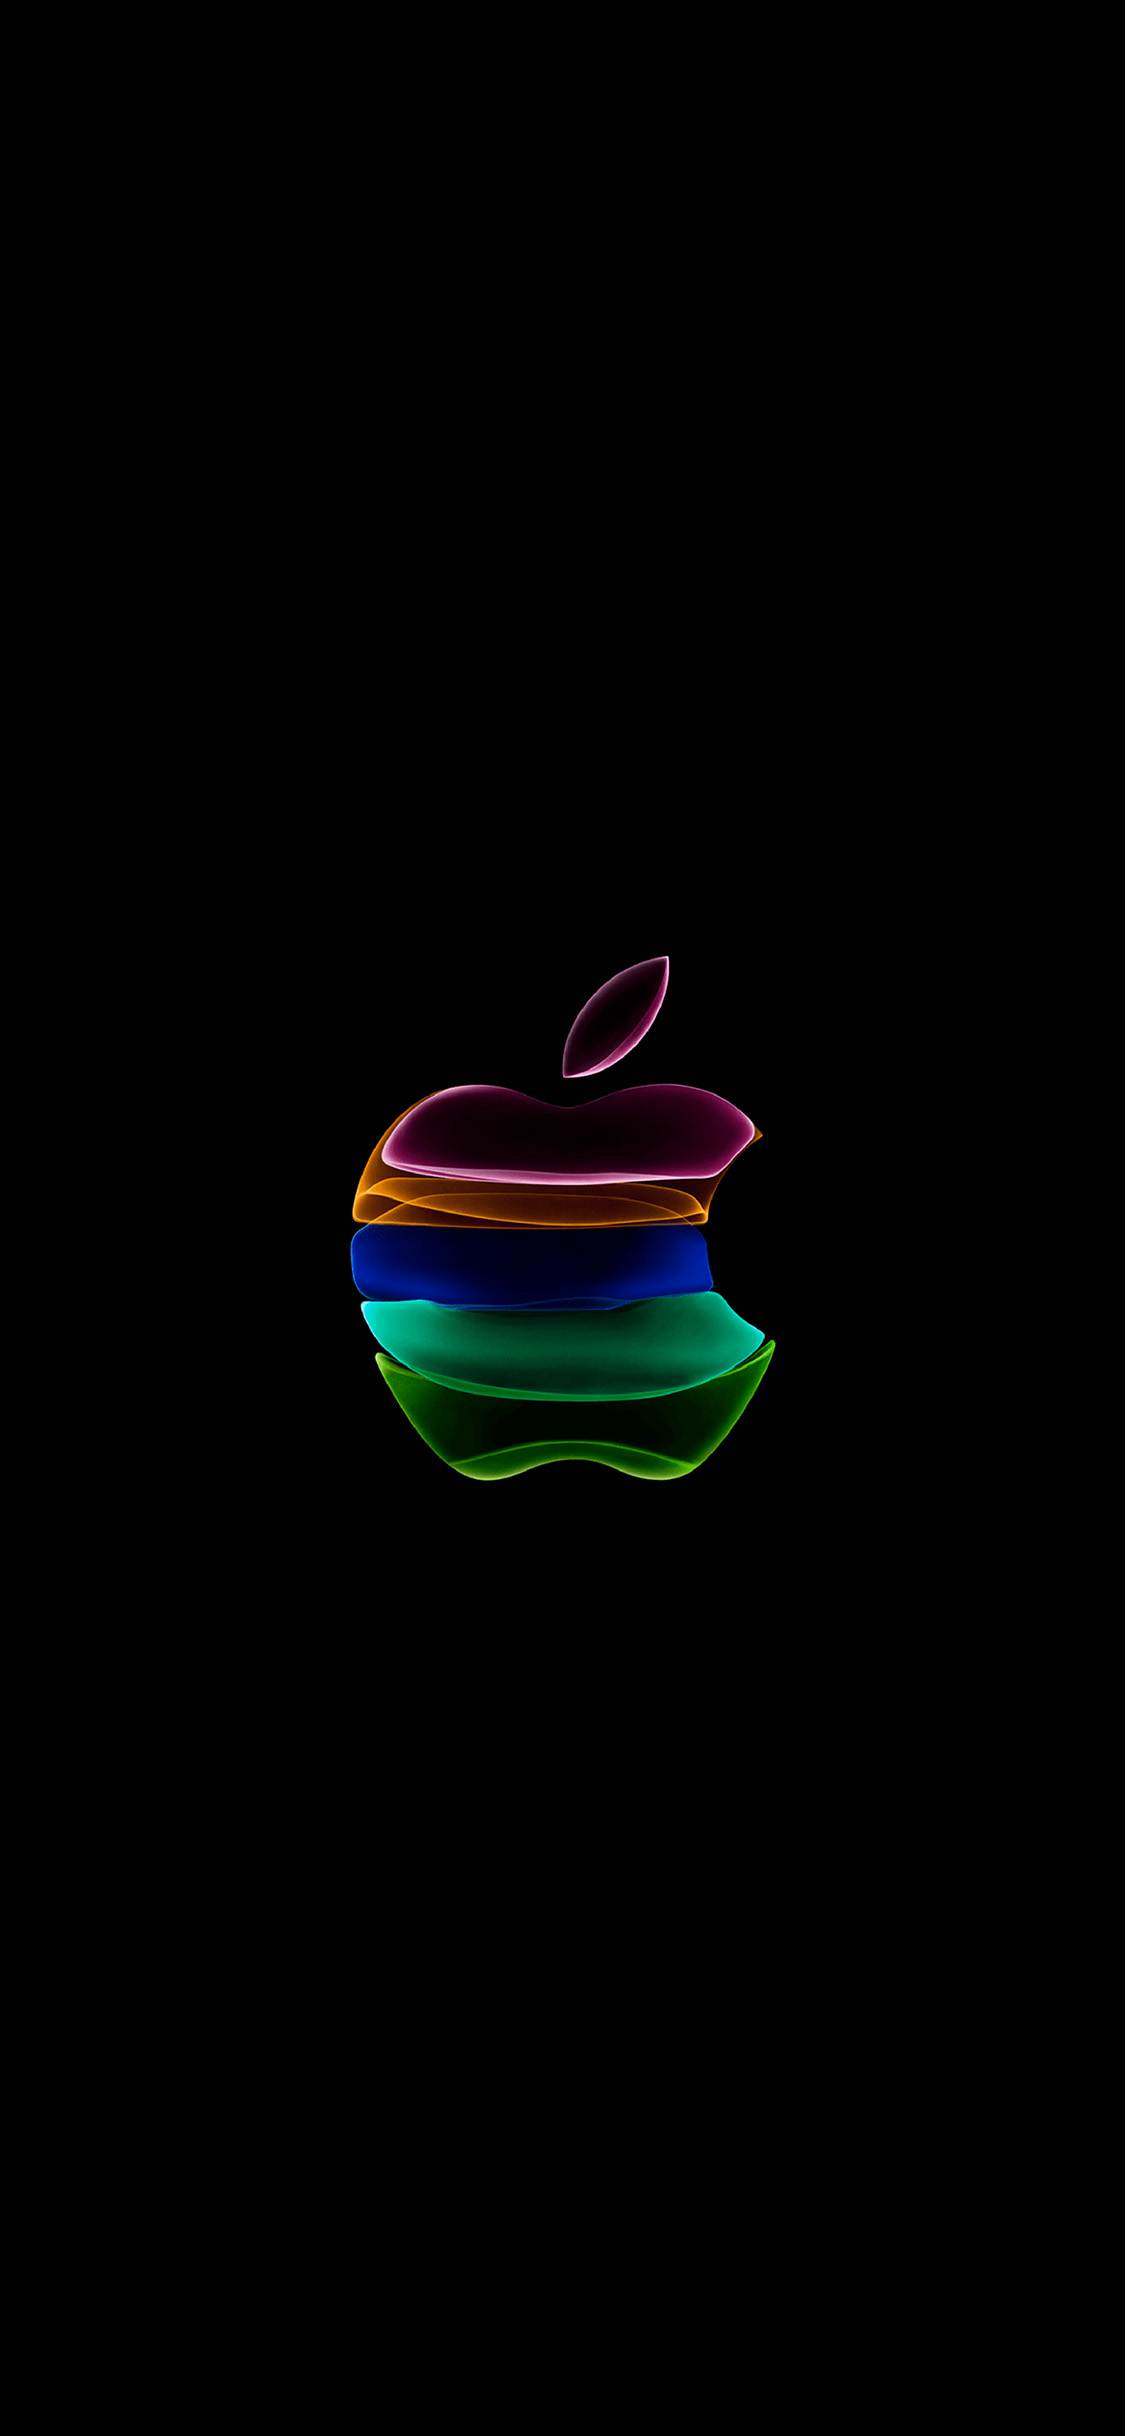 iPhone X wallpaper. art apple logo minimal simple dark